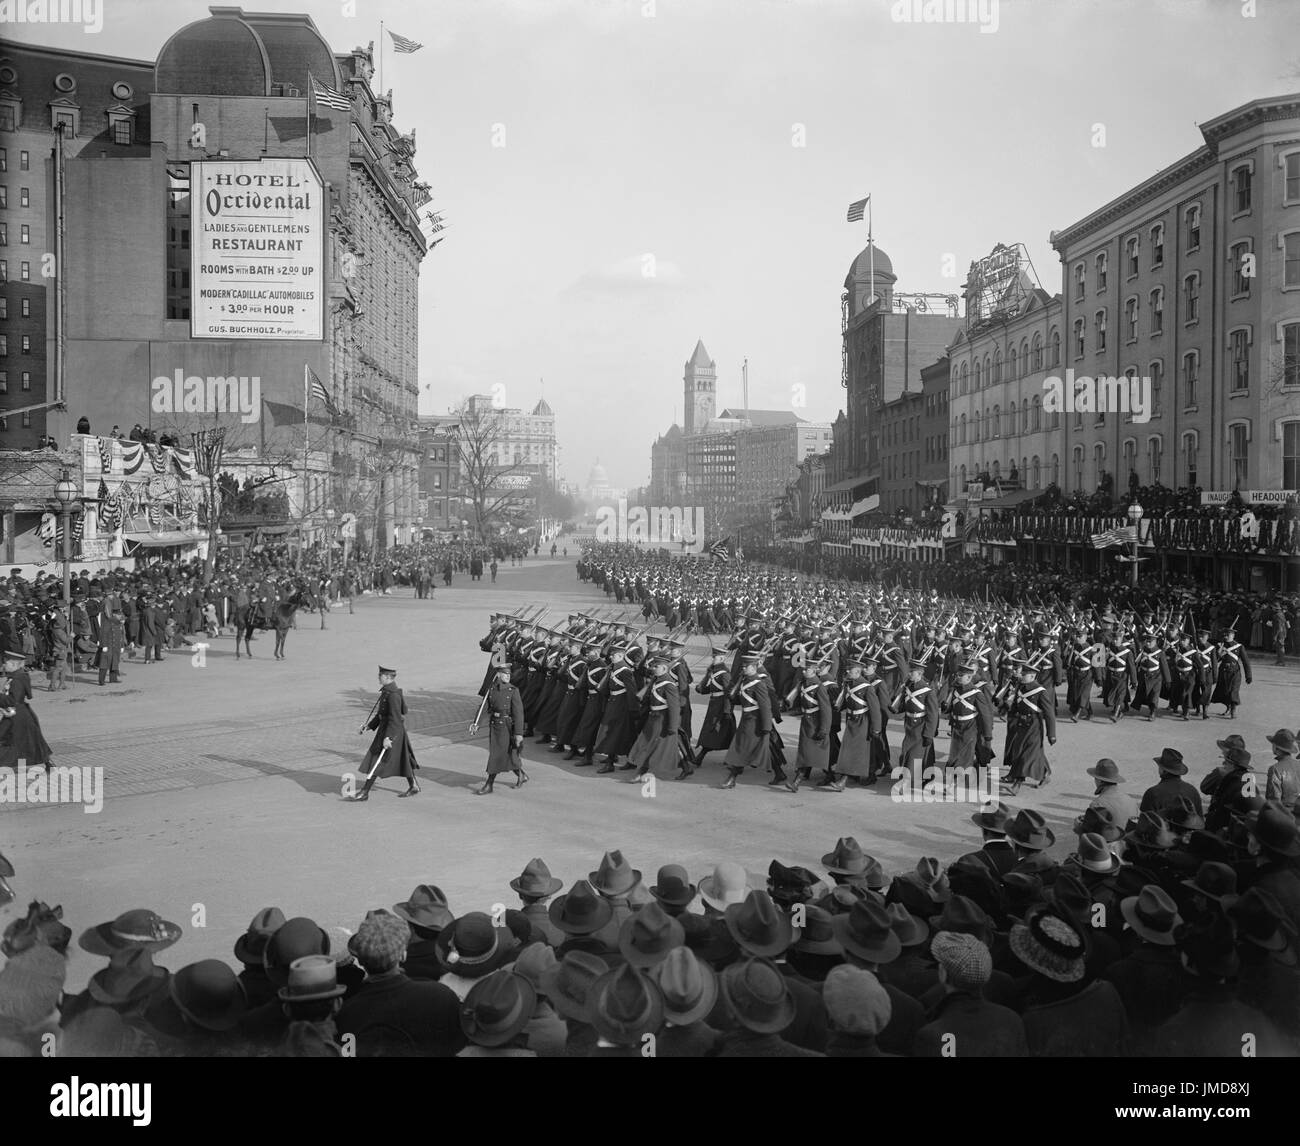 Inauguration Parade for U.S. President Woodrow Wilson, Pennsylvania Avenue, Washington DC, USA, Harris & Ewing, March 5, 1917 Stock Photo